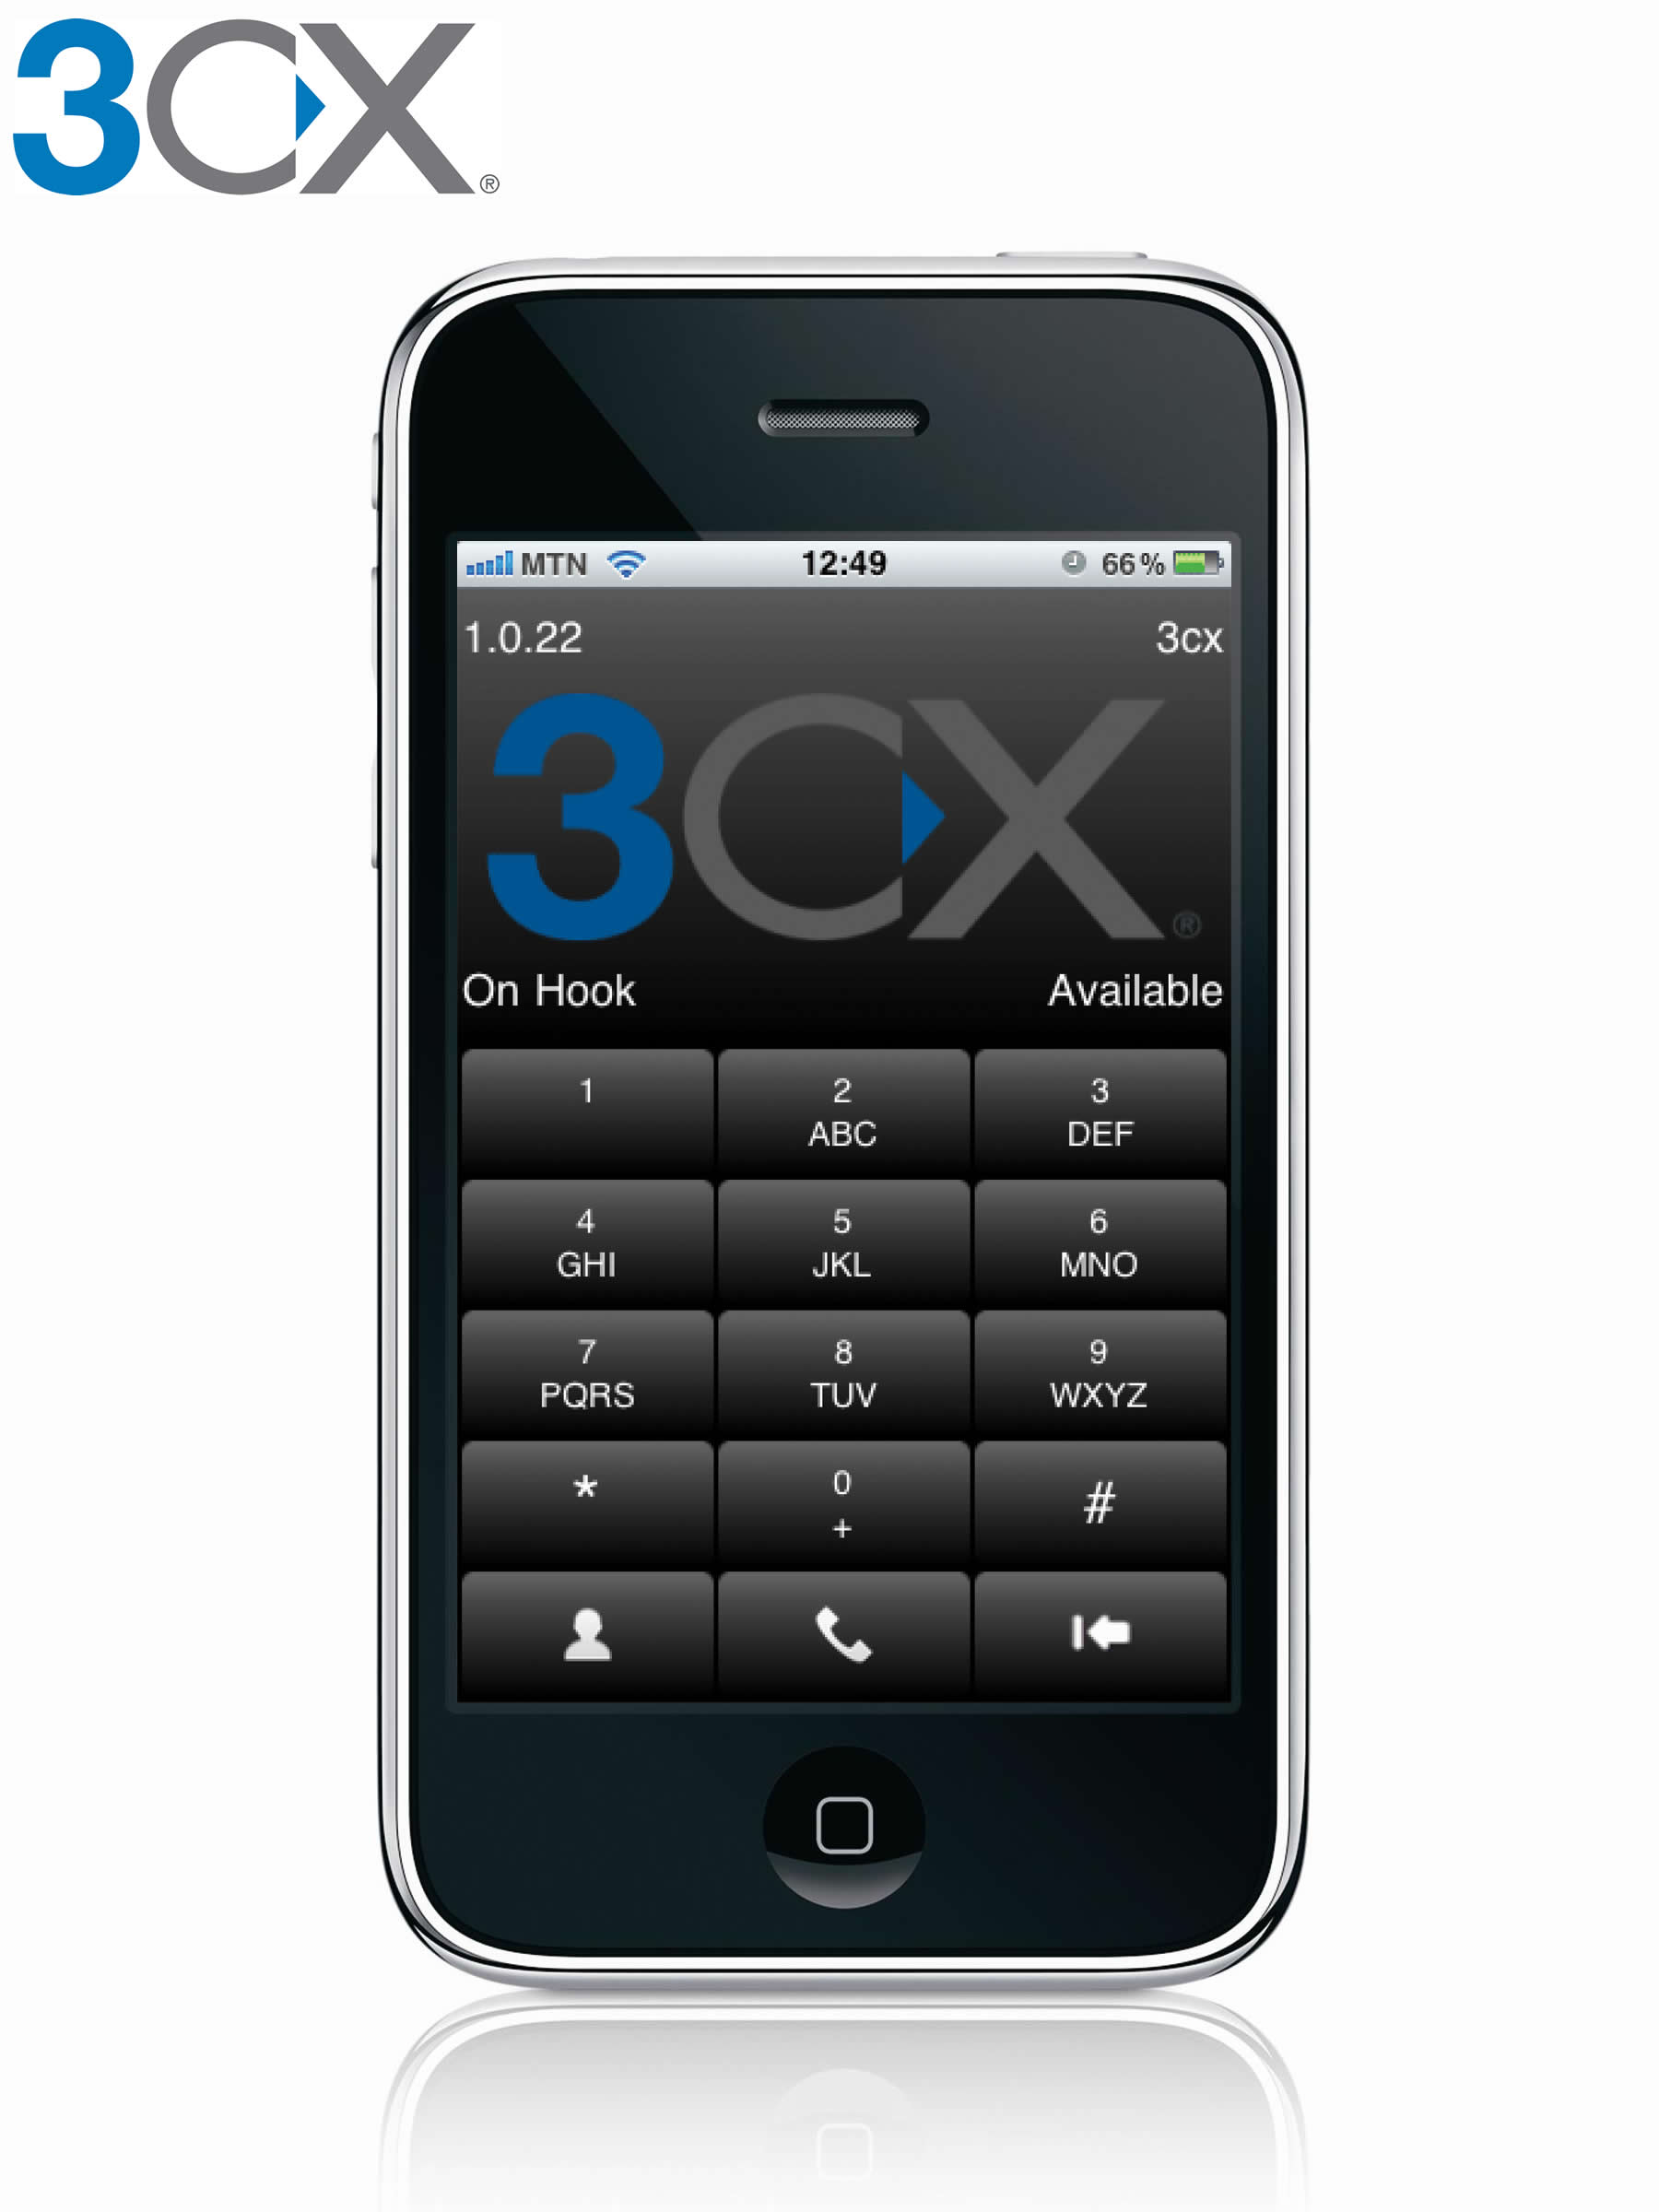 3cx phone